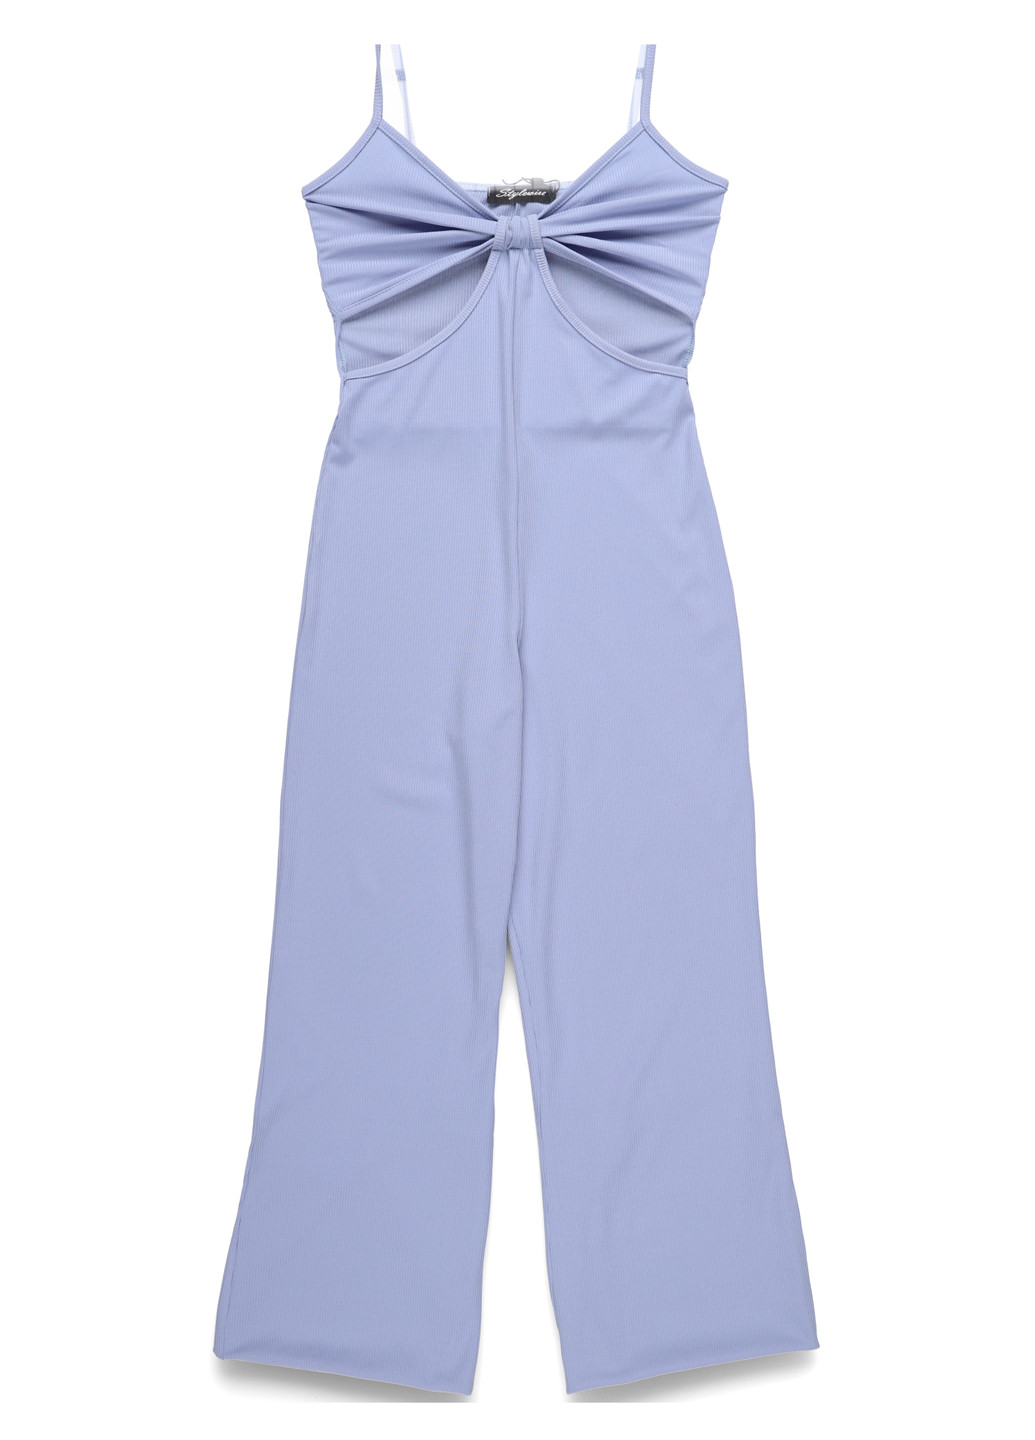 Комбинезон Stylewise комбинезон-брюки однотонный голубой кэжуал полиэстер